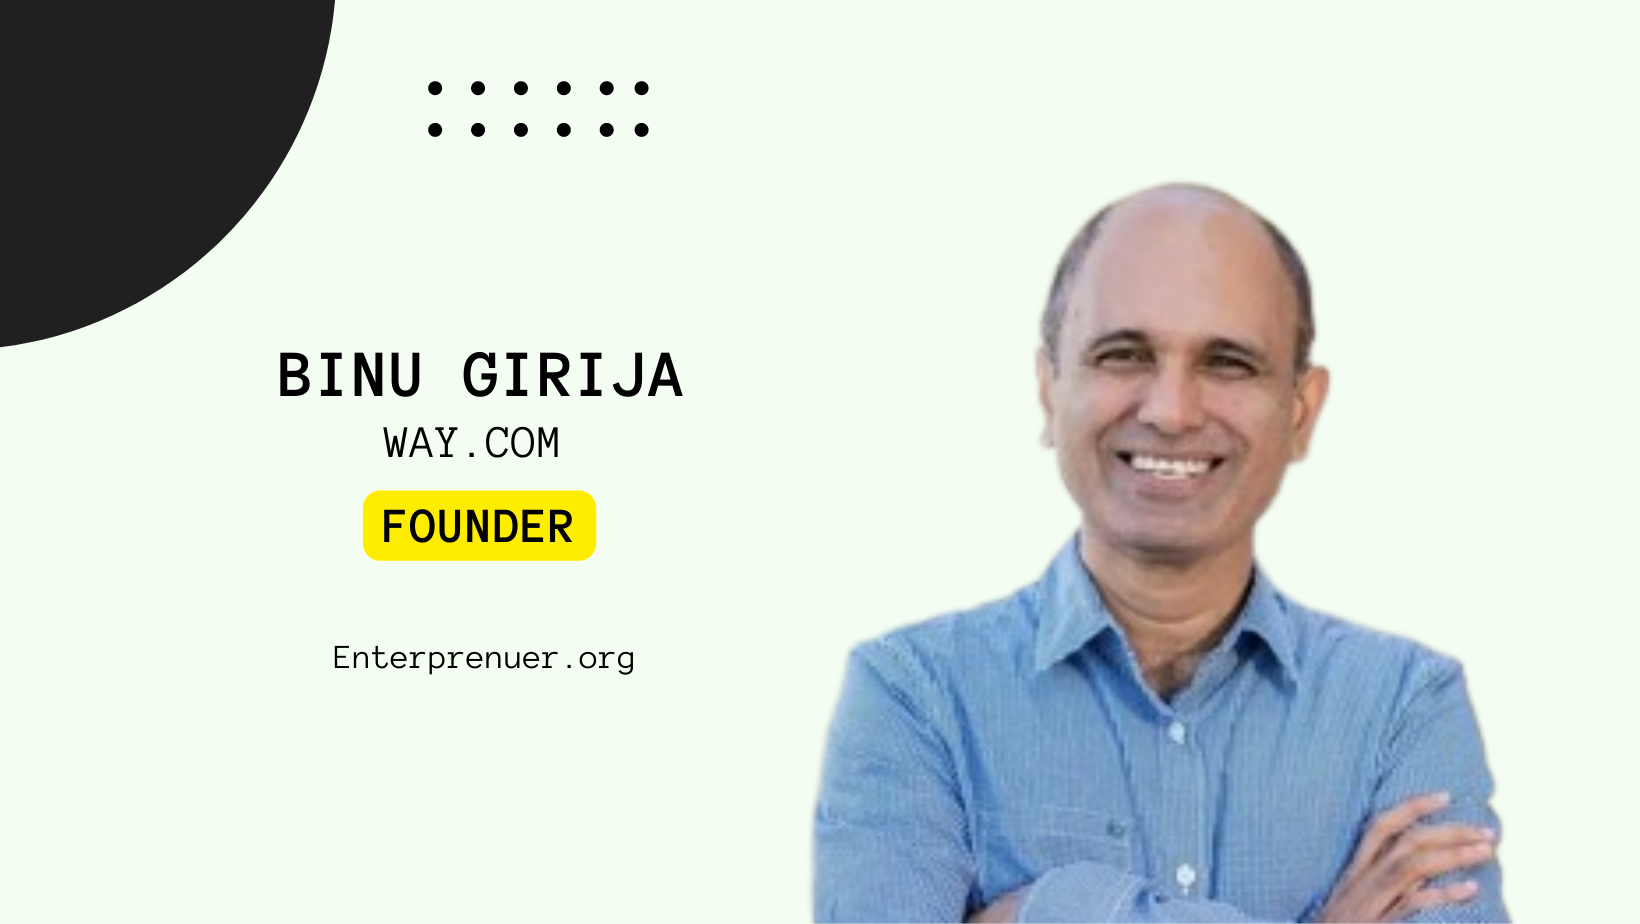 Meet Binu Girija Founder of Way.com